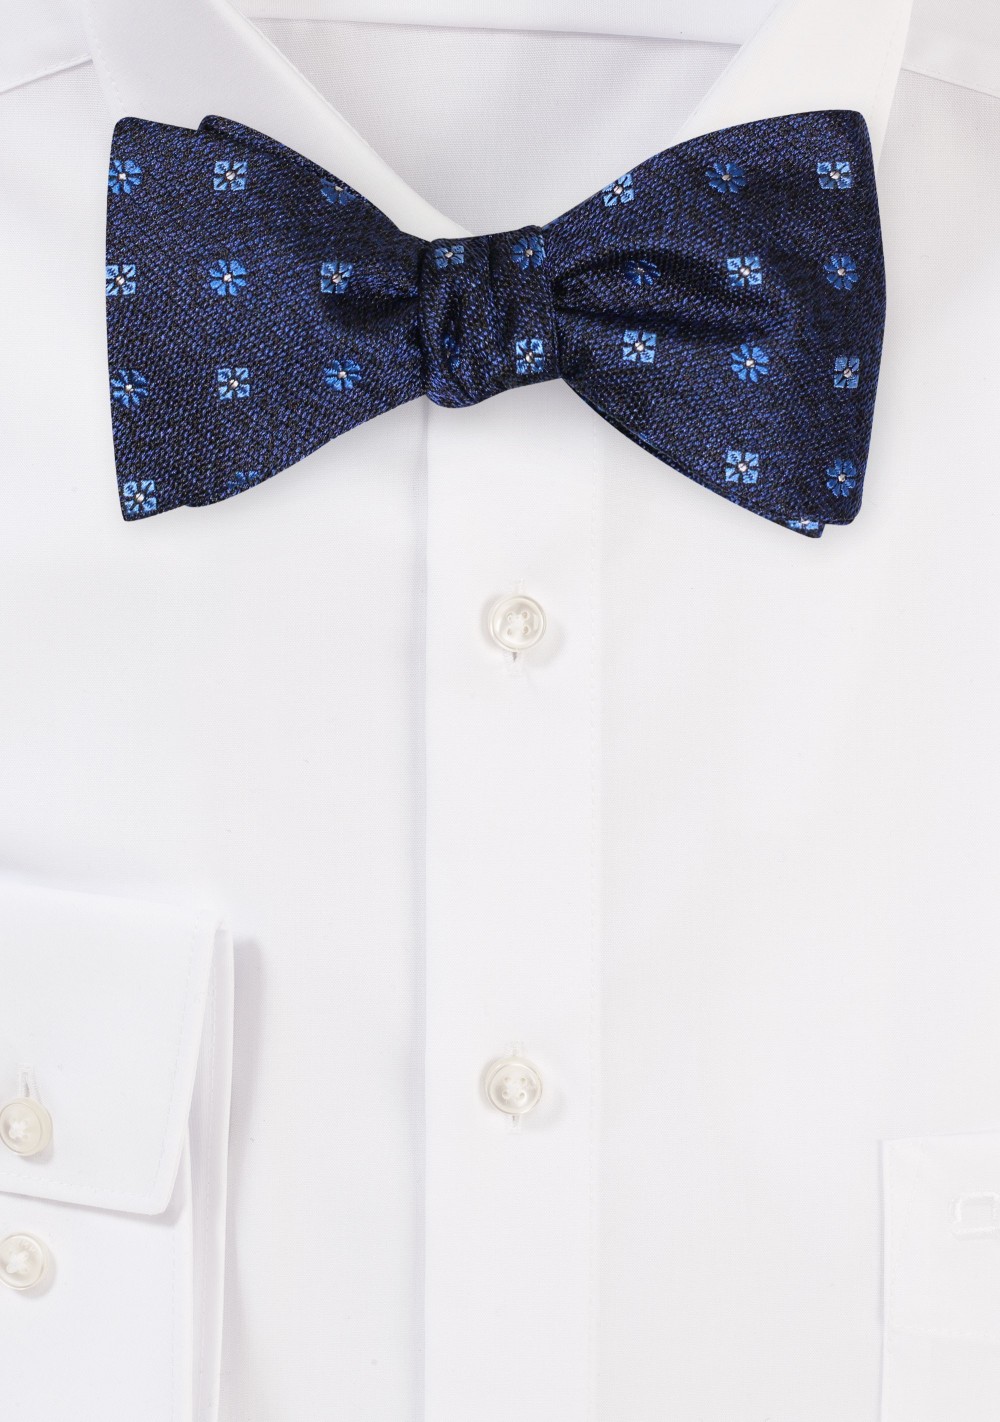 Navy Blue Self-Tie Bow Tie in Pure Silk